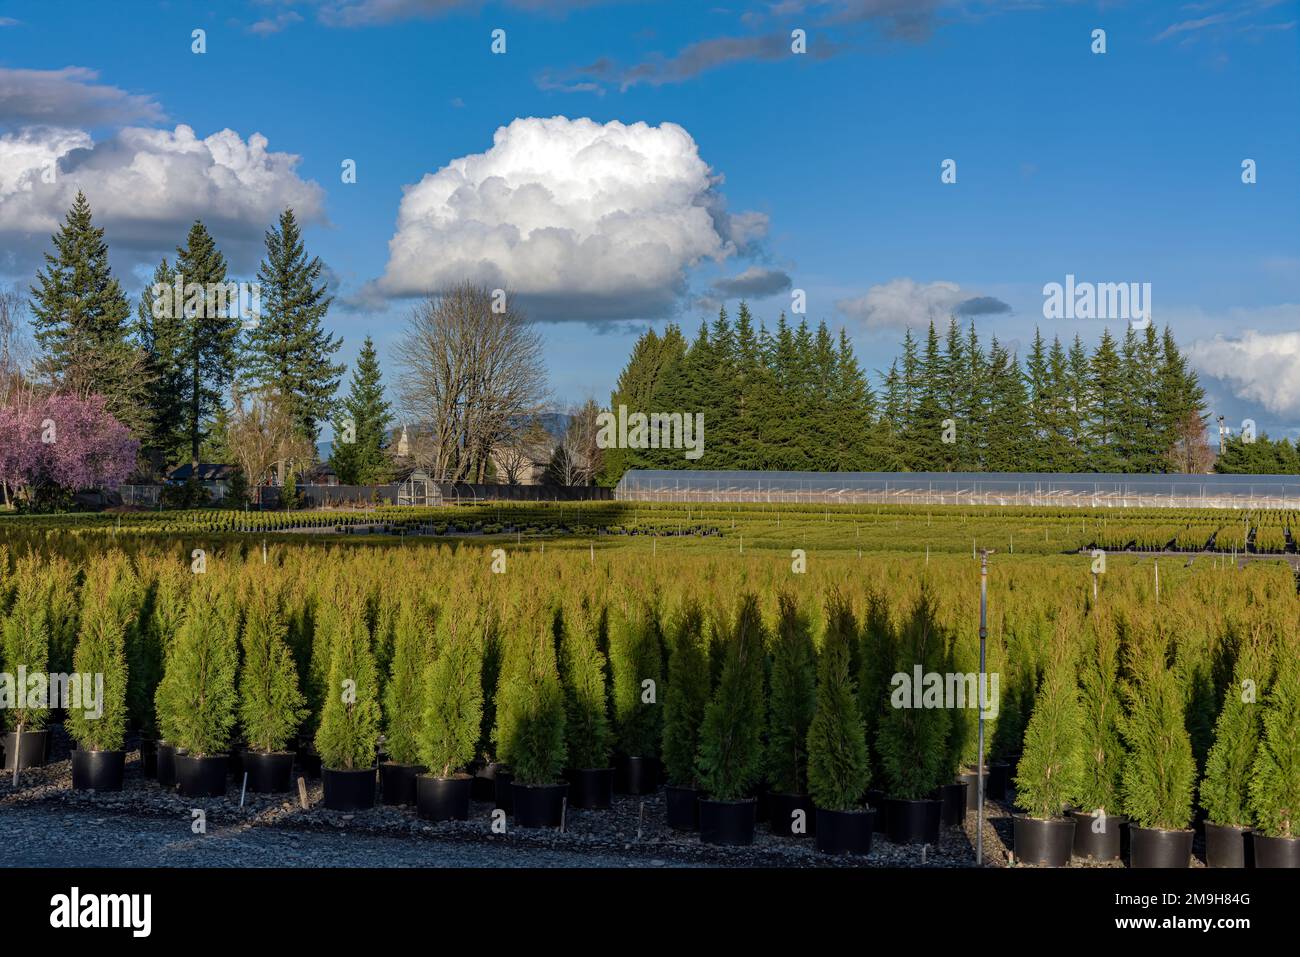 Abundance of potted trees in tree farm, Oregon, USA Stock Photo